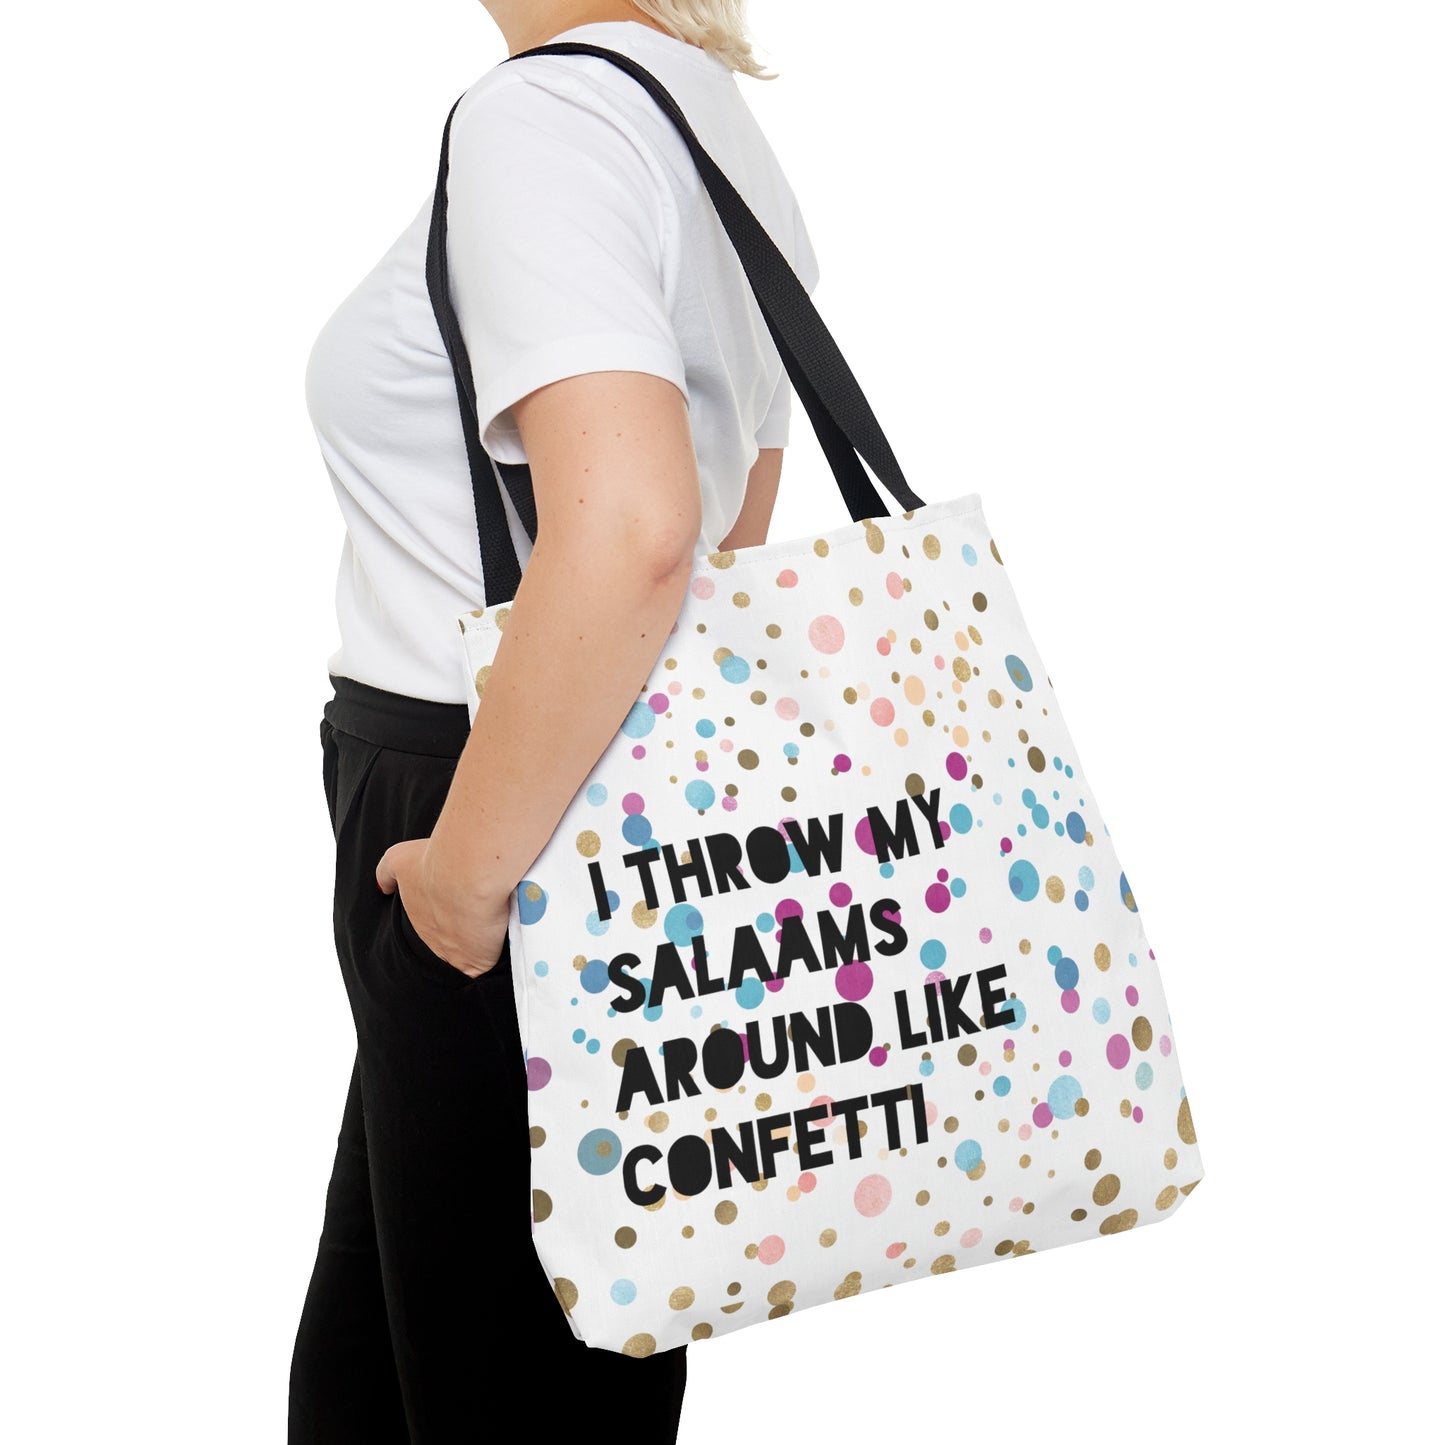 Confetti Salaams Tote Bag